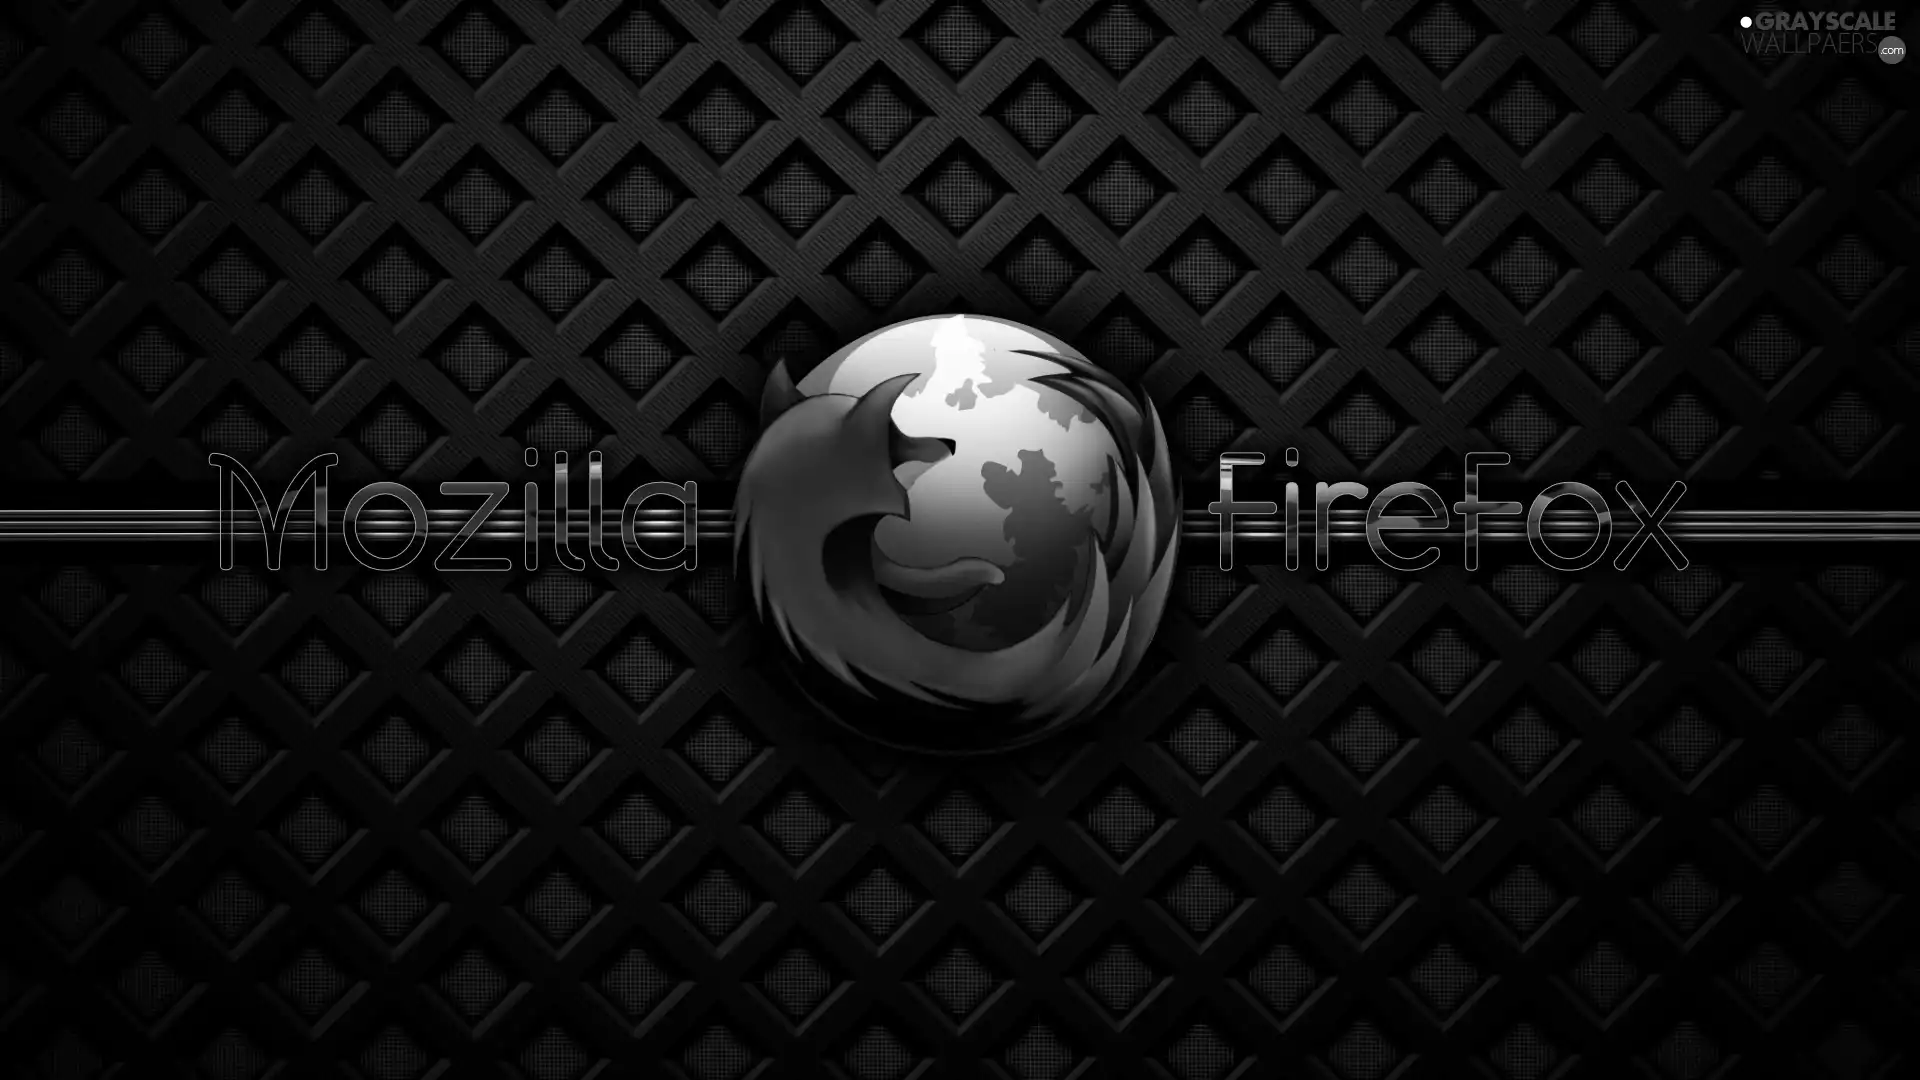 FireFox, logo